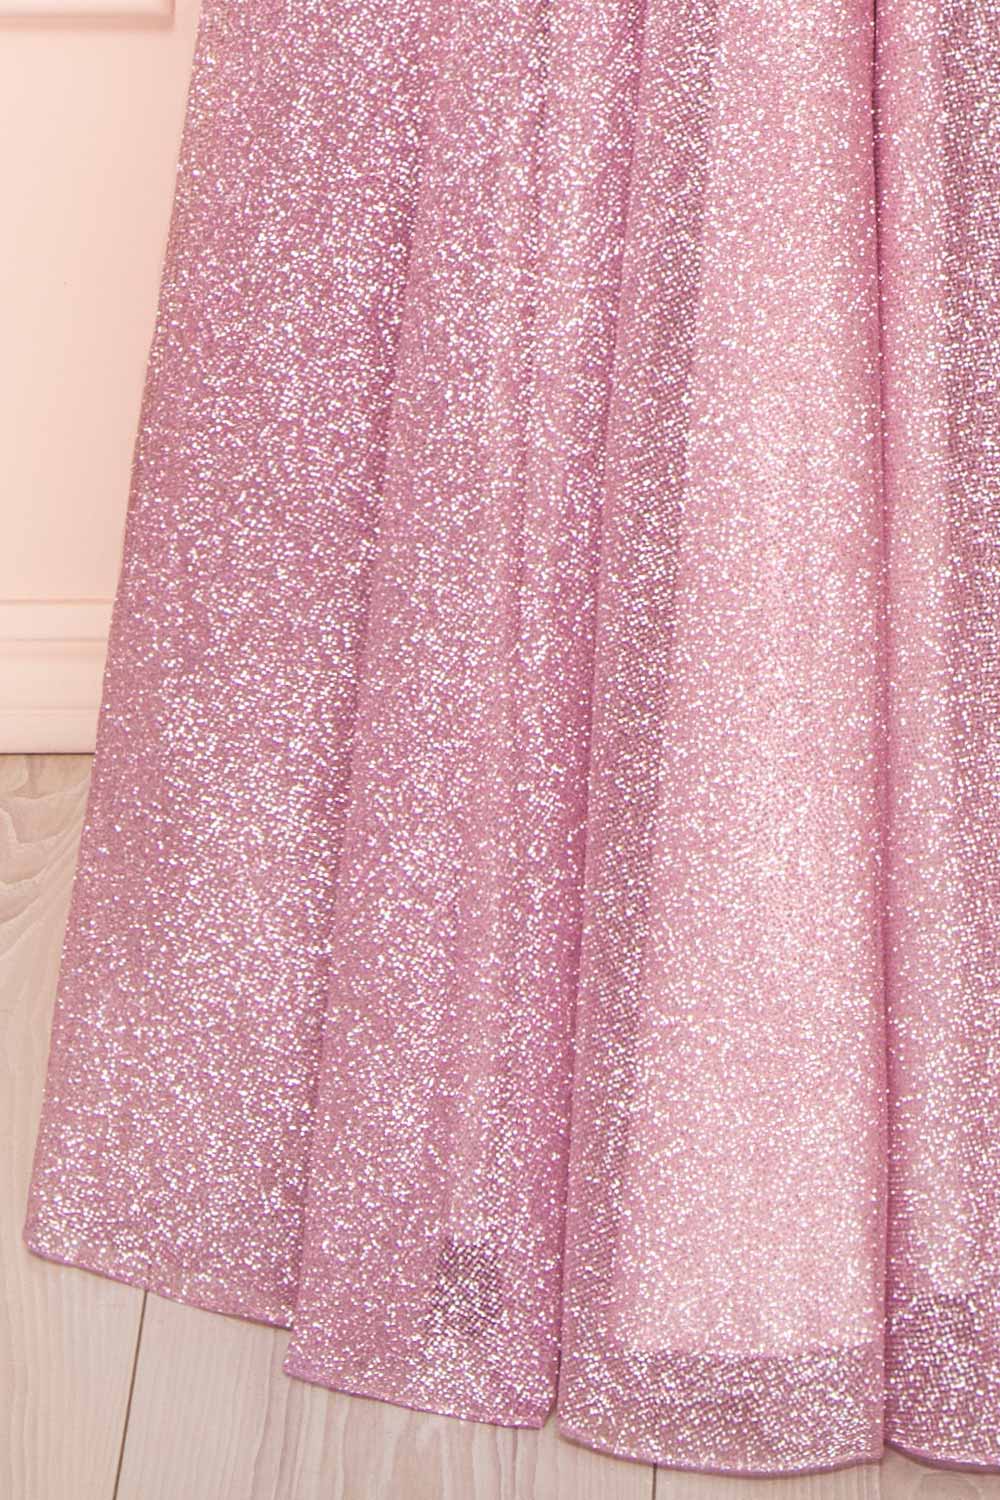 Lexy Pink Sparkly Cowl Neck Maxi Dress | Boutique 1861 bottom